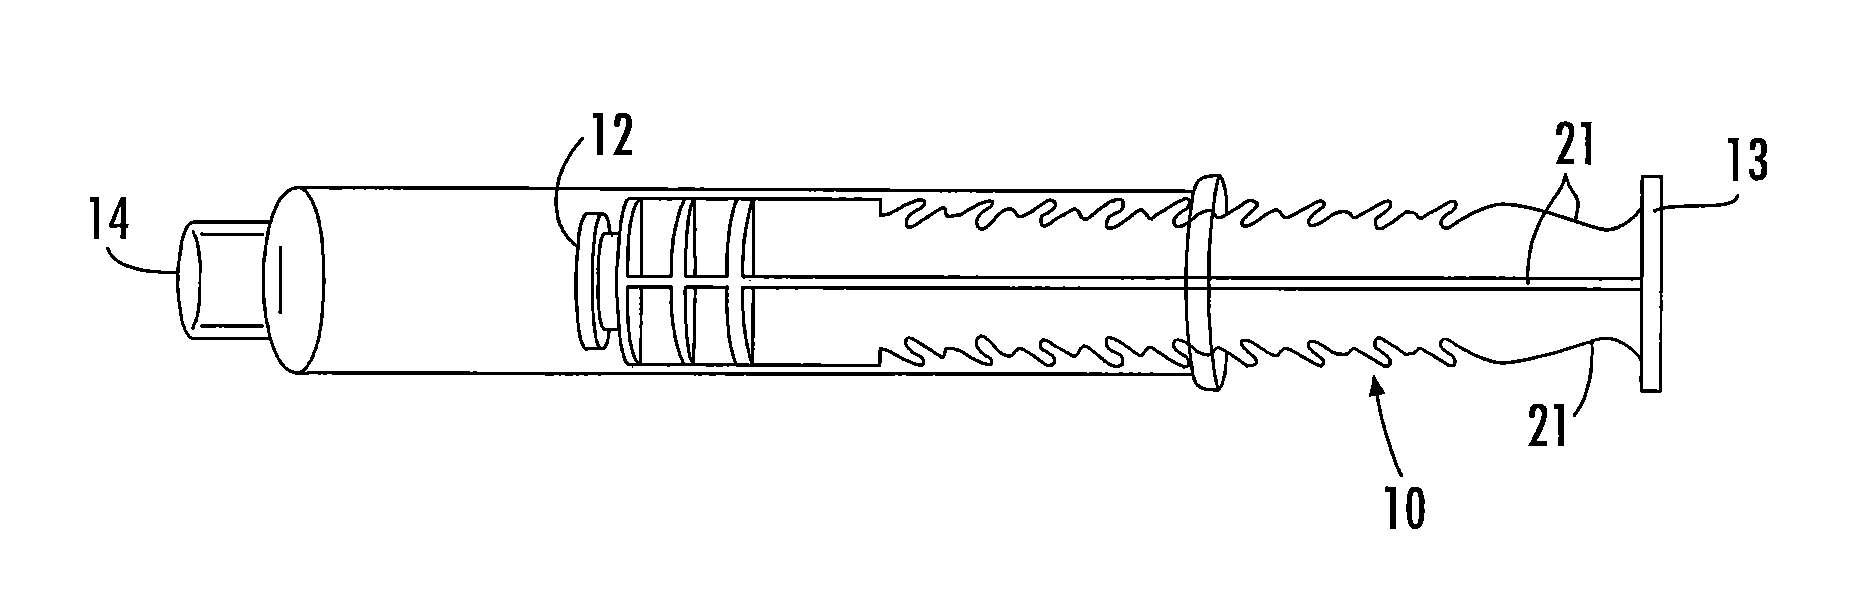 Incremental syringe